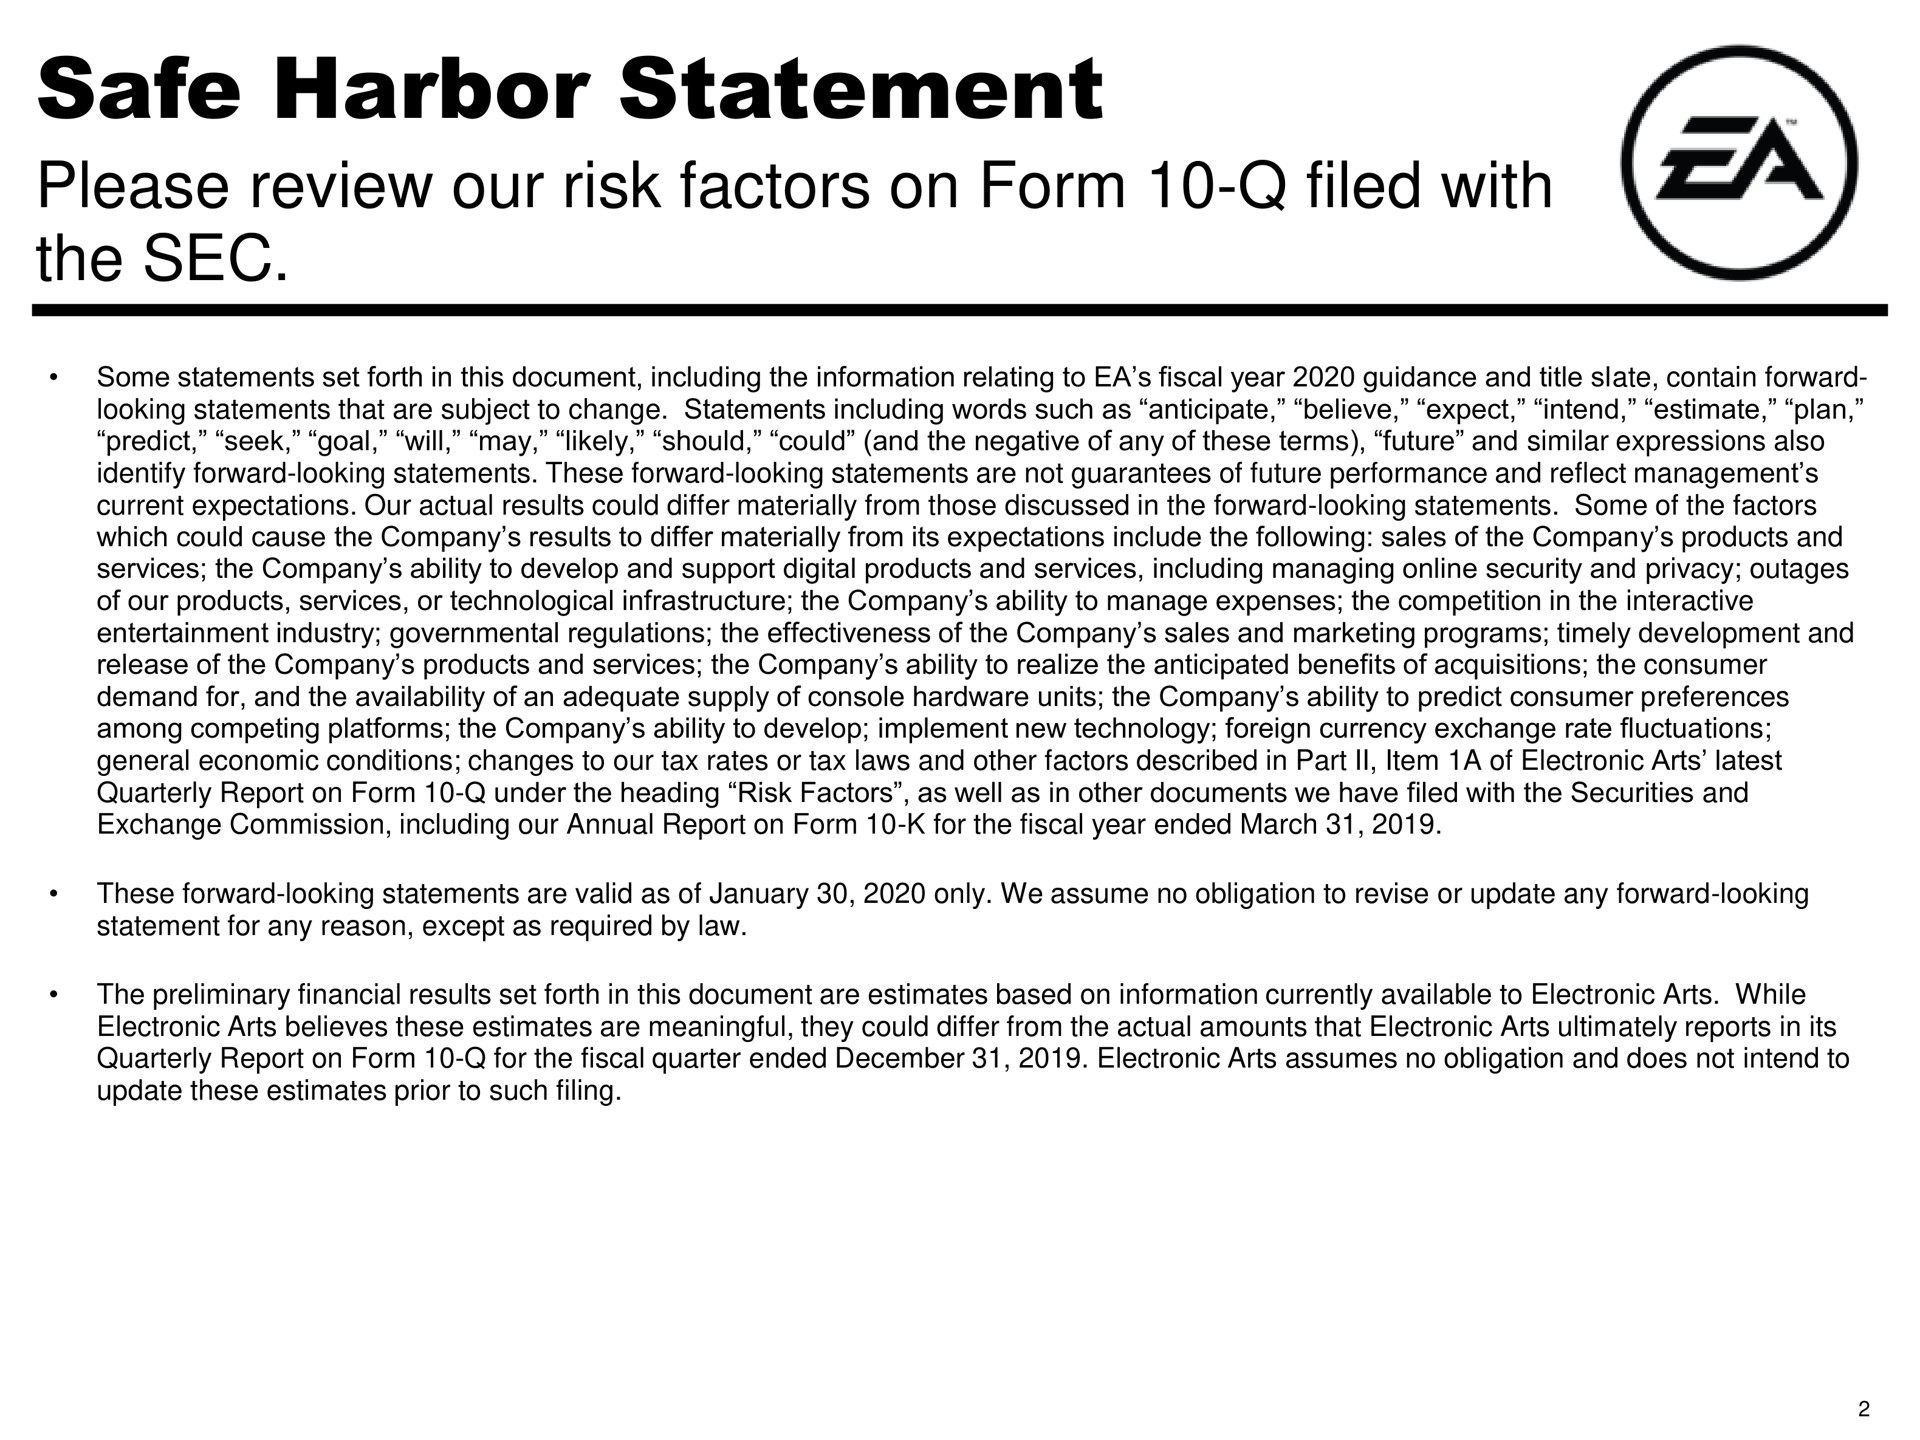 safe harbor statement | Electronic Arts